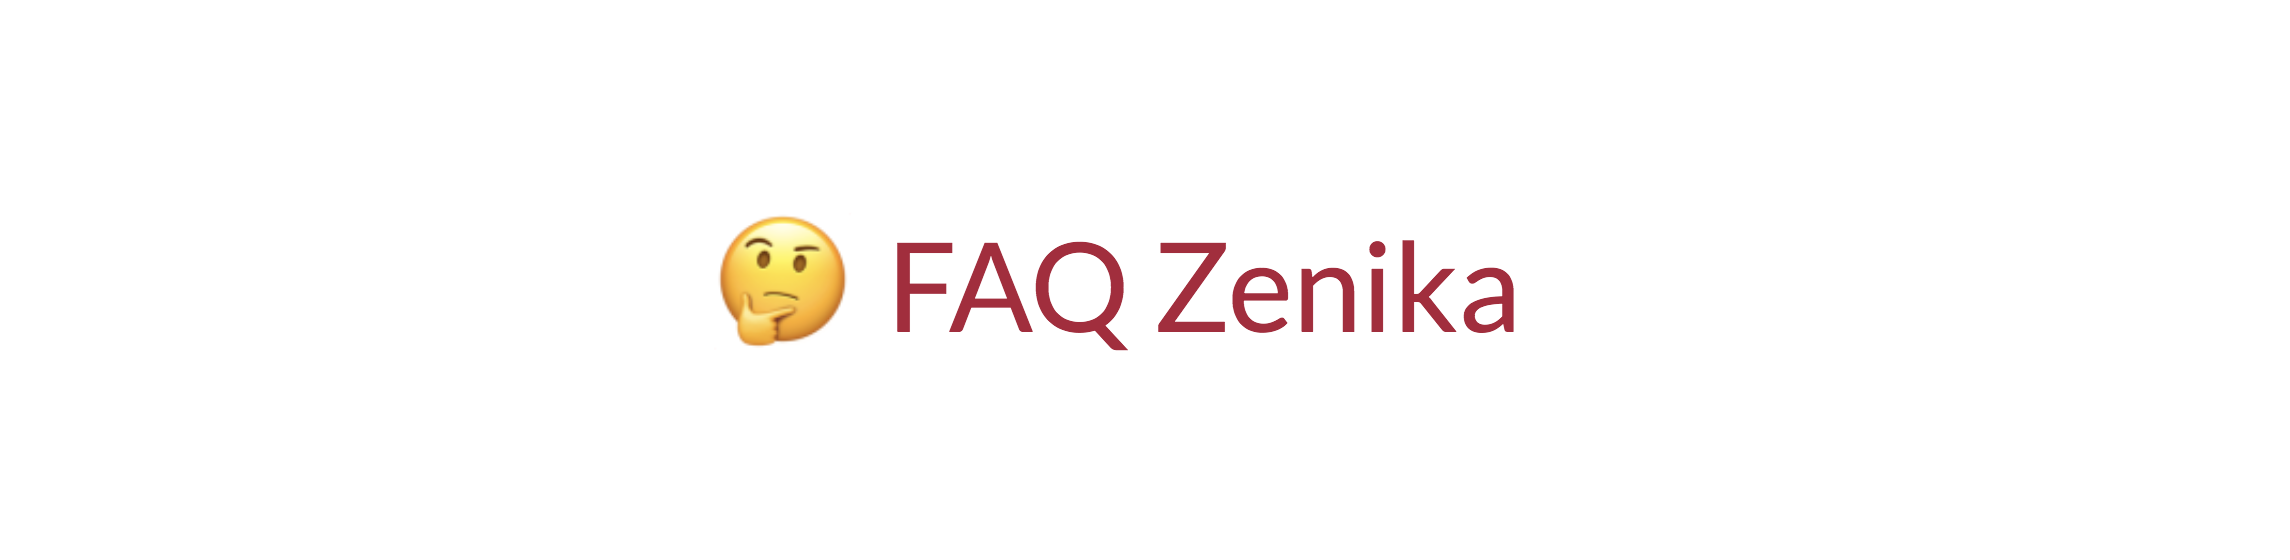 FAQ Zenika